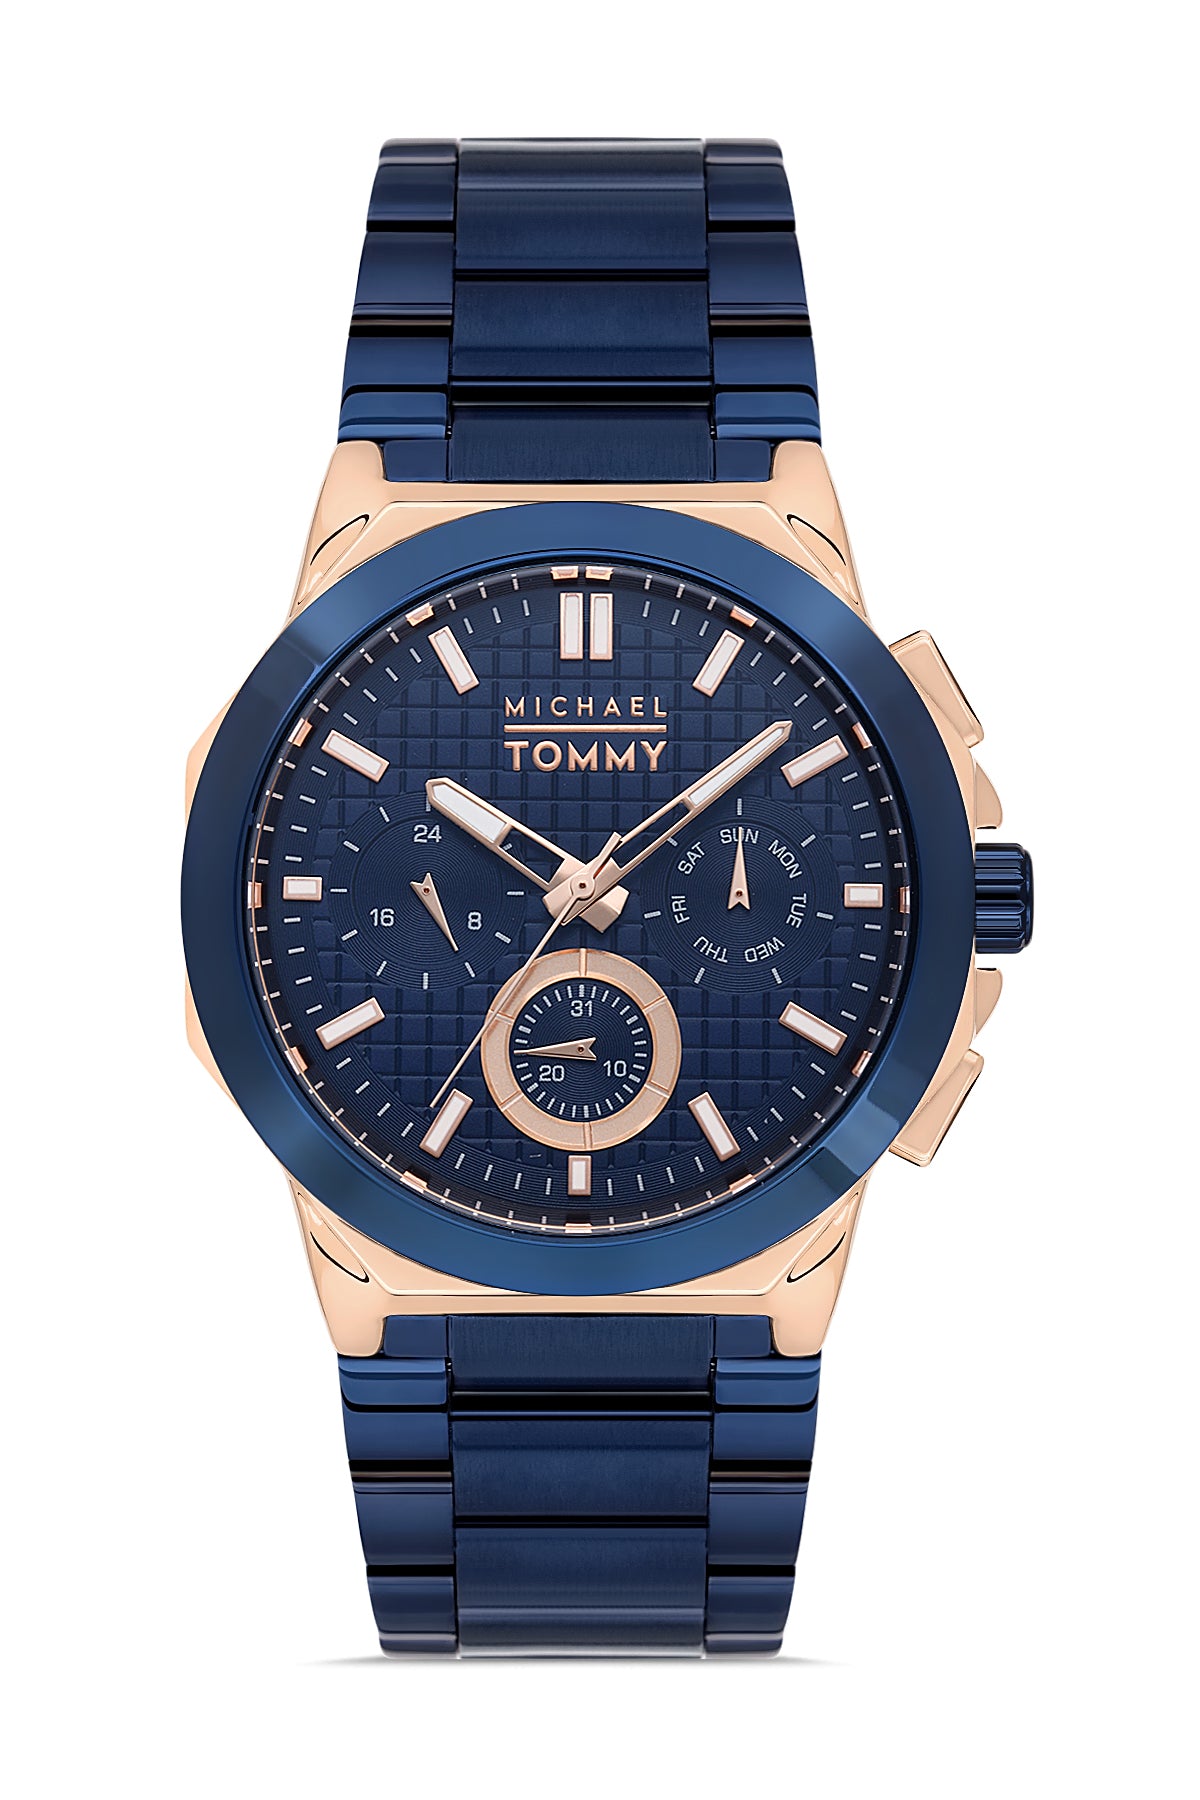 Michael Tommy Men's Watch MT-31002G-LRL14